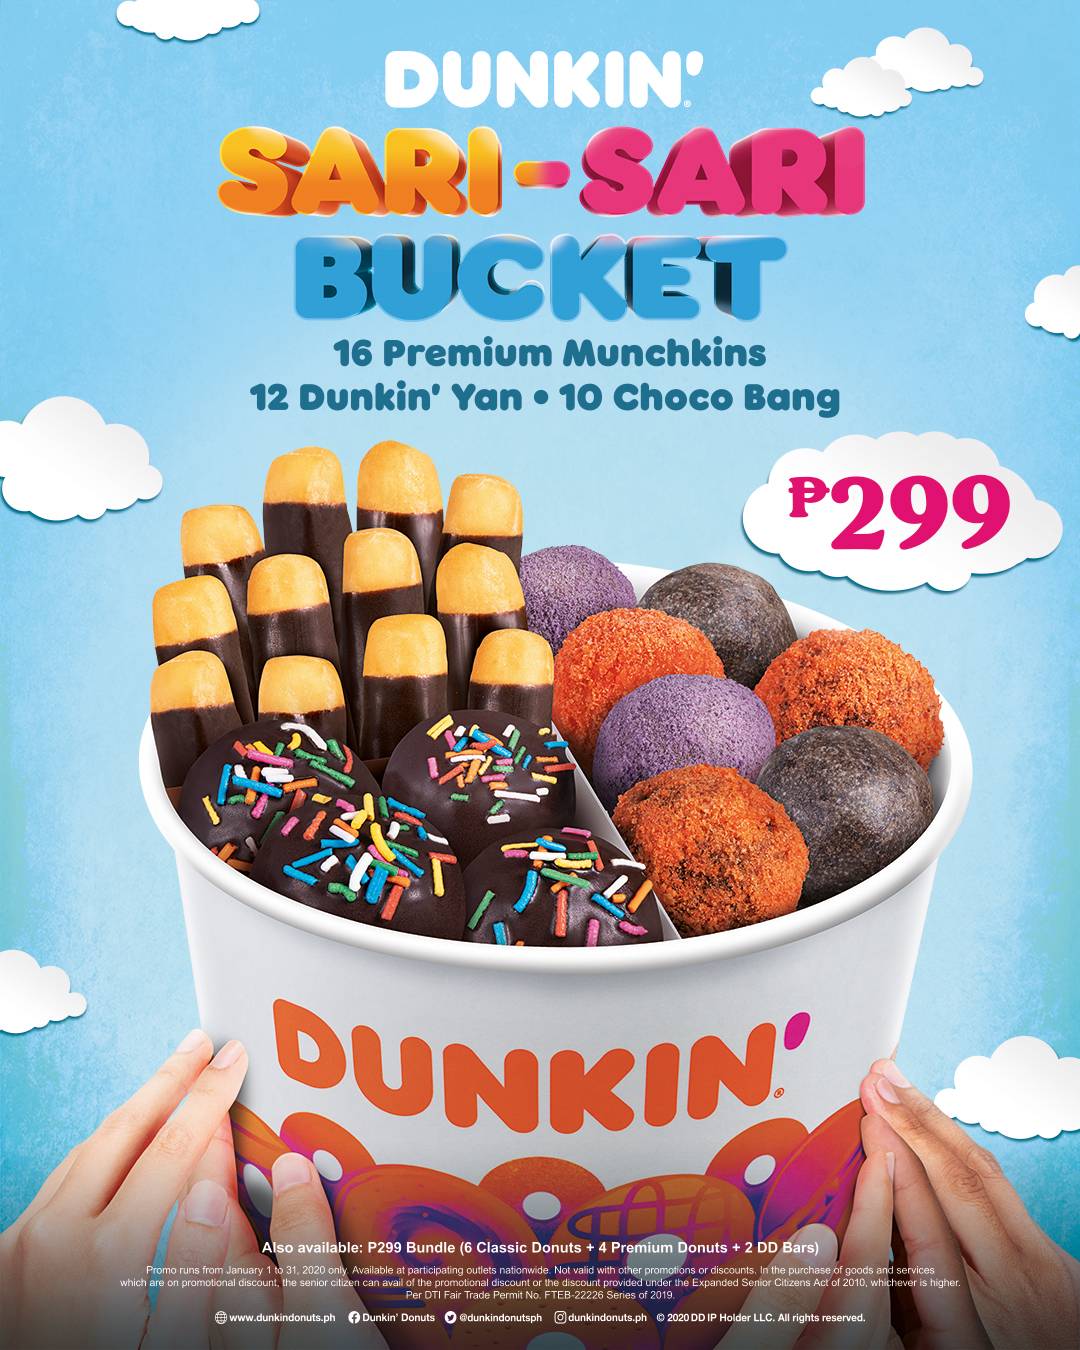 Dunkin' Donuts New Sari-Sari Bucket Includes Different Dunkin